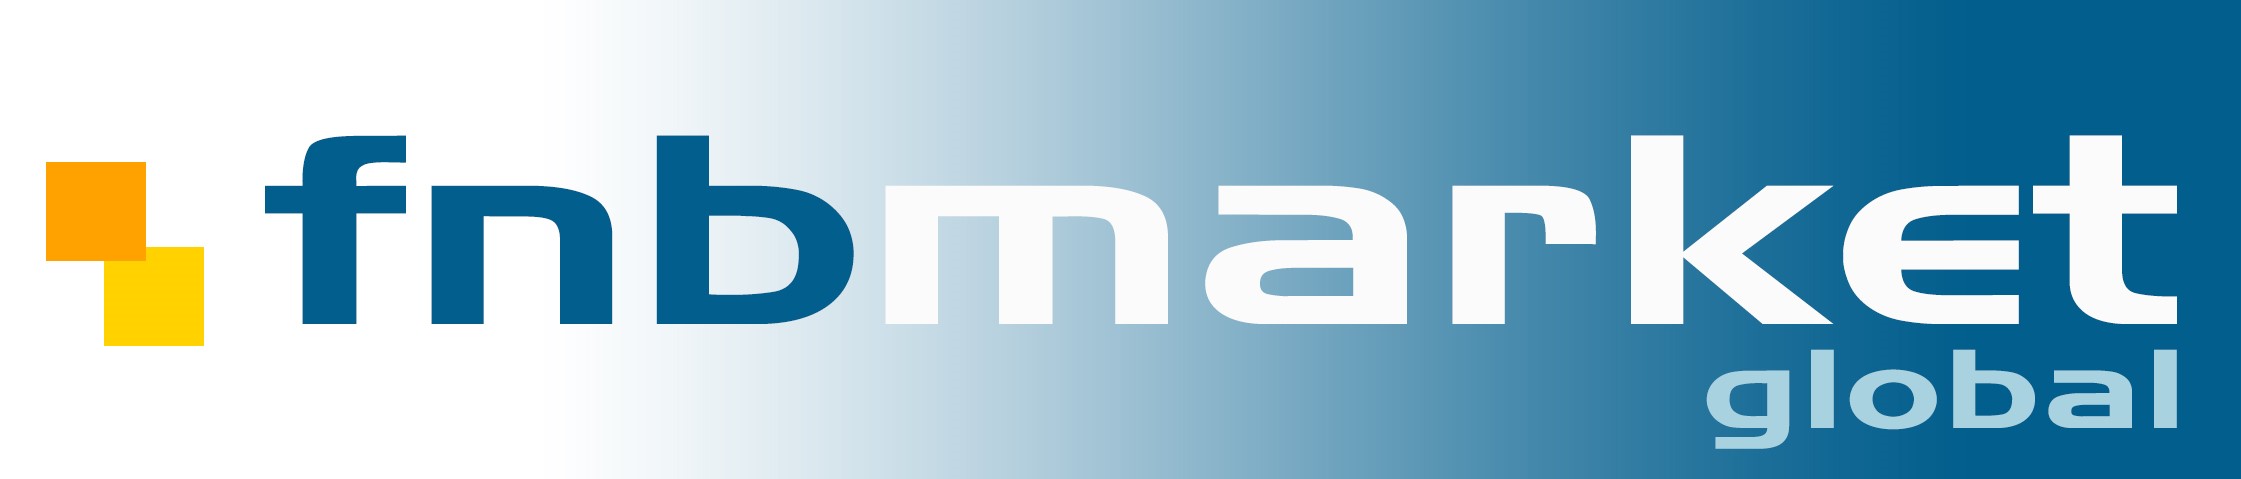 IMDA's Grow Digital initiative partner: Bizmann’s B2B e-commerce open platform, fnbmarket.com_global